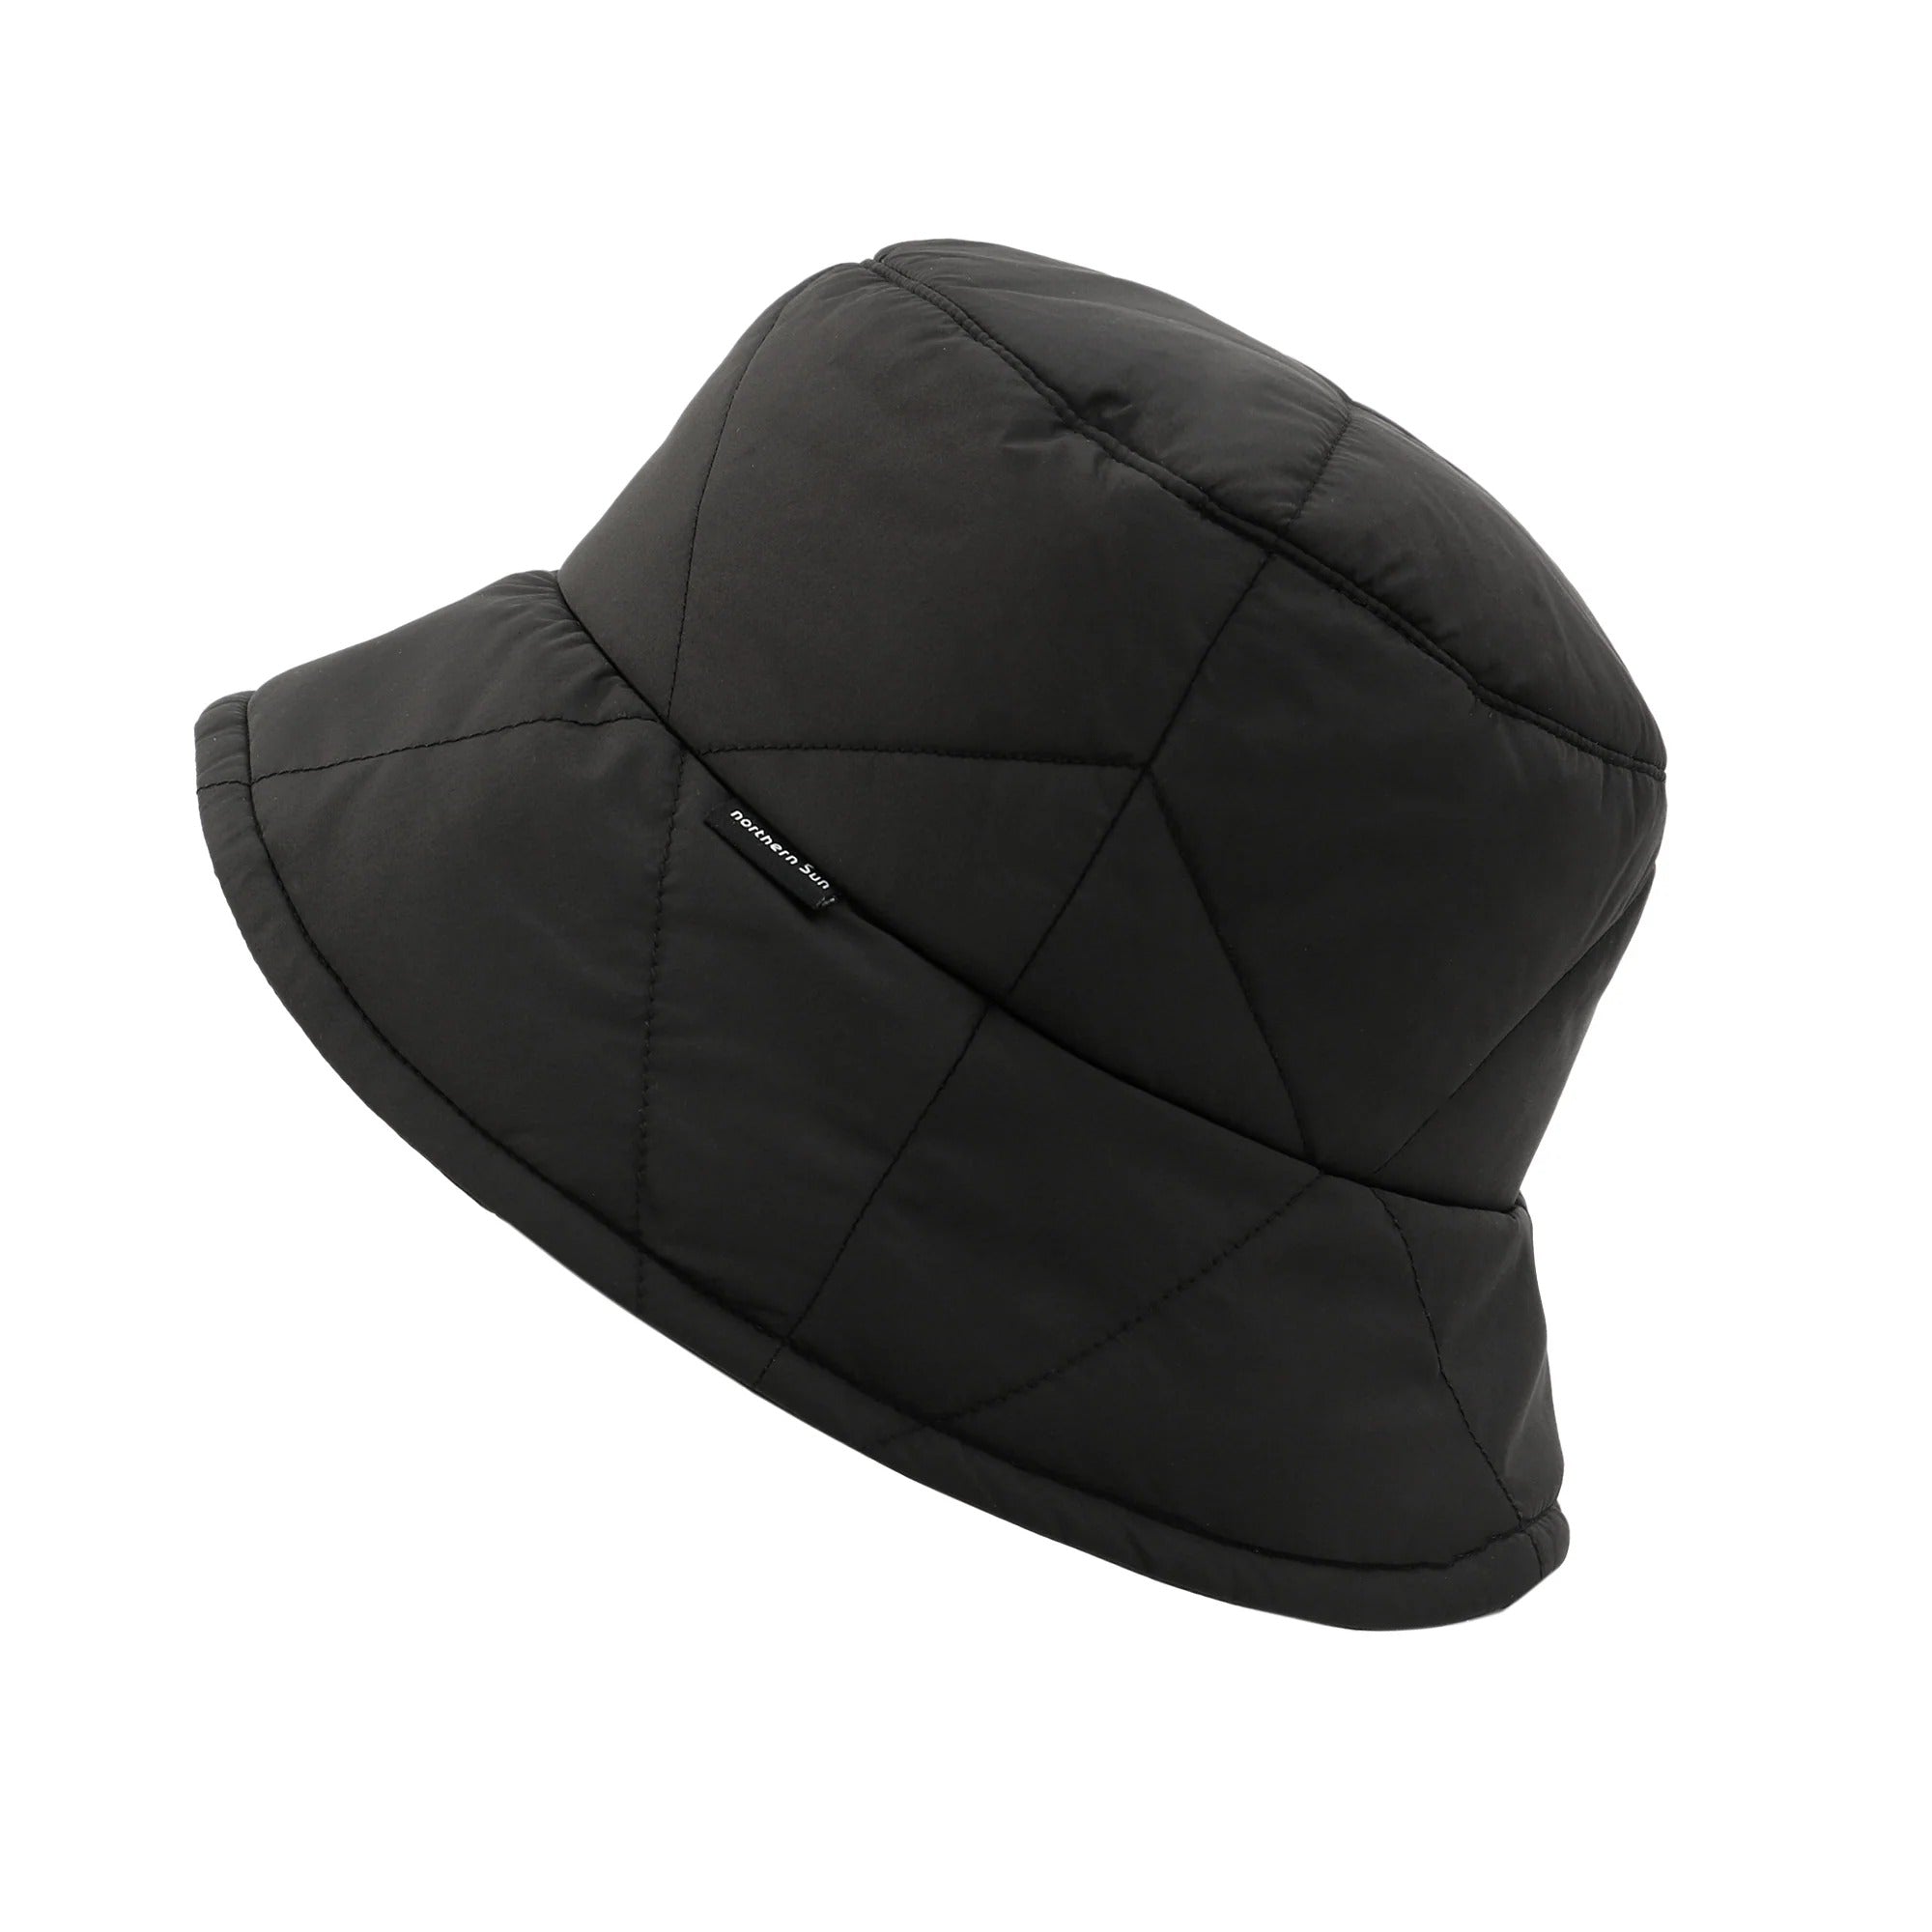 Black Bucket hat Classic Basic Design Breathable unisex style foldable L/XL